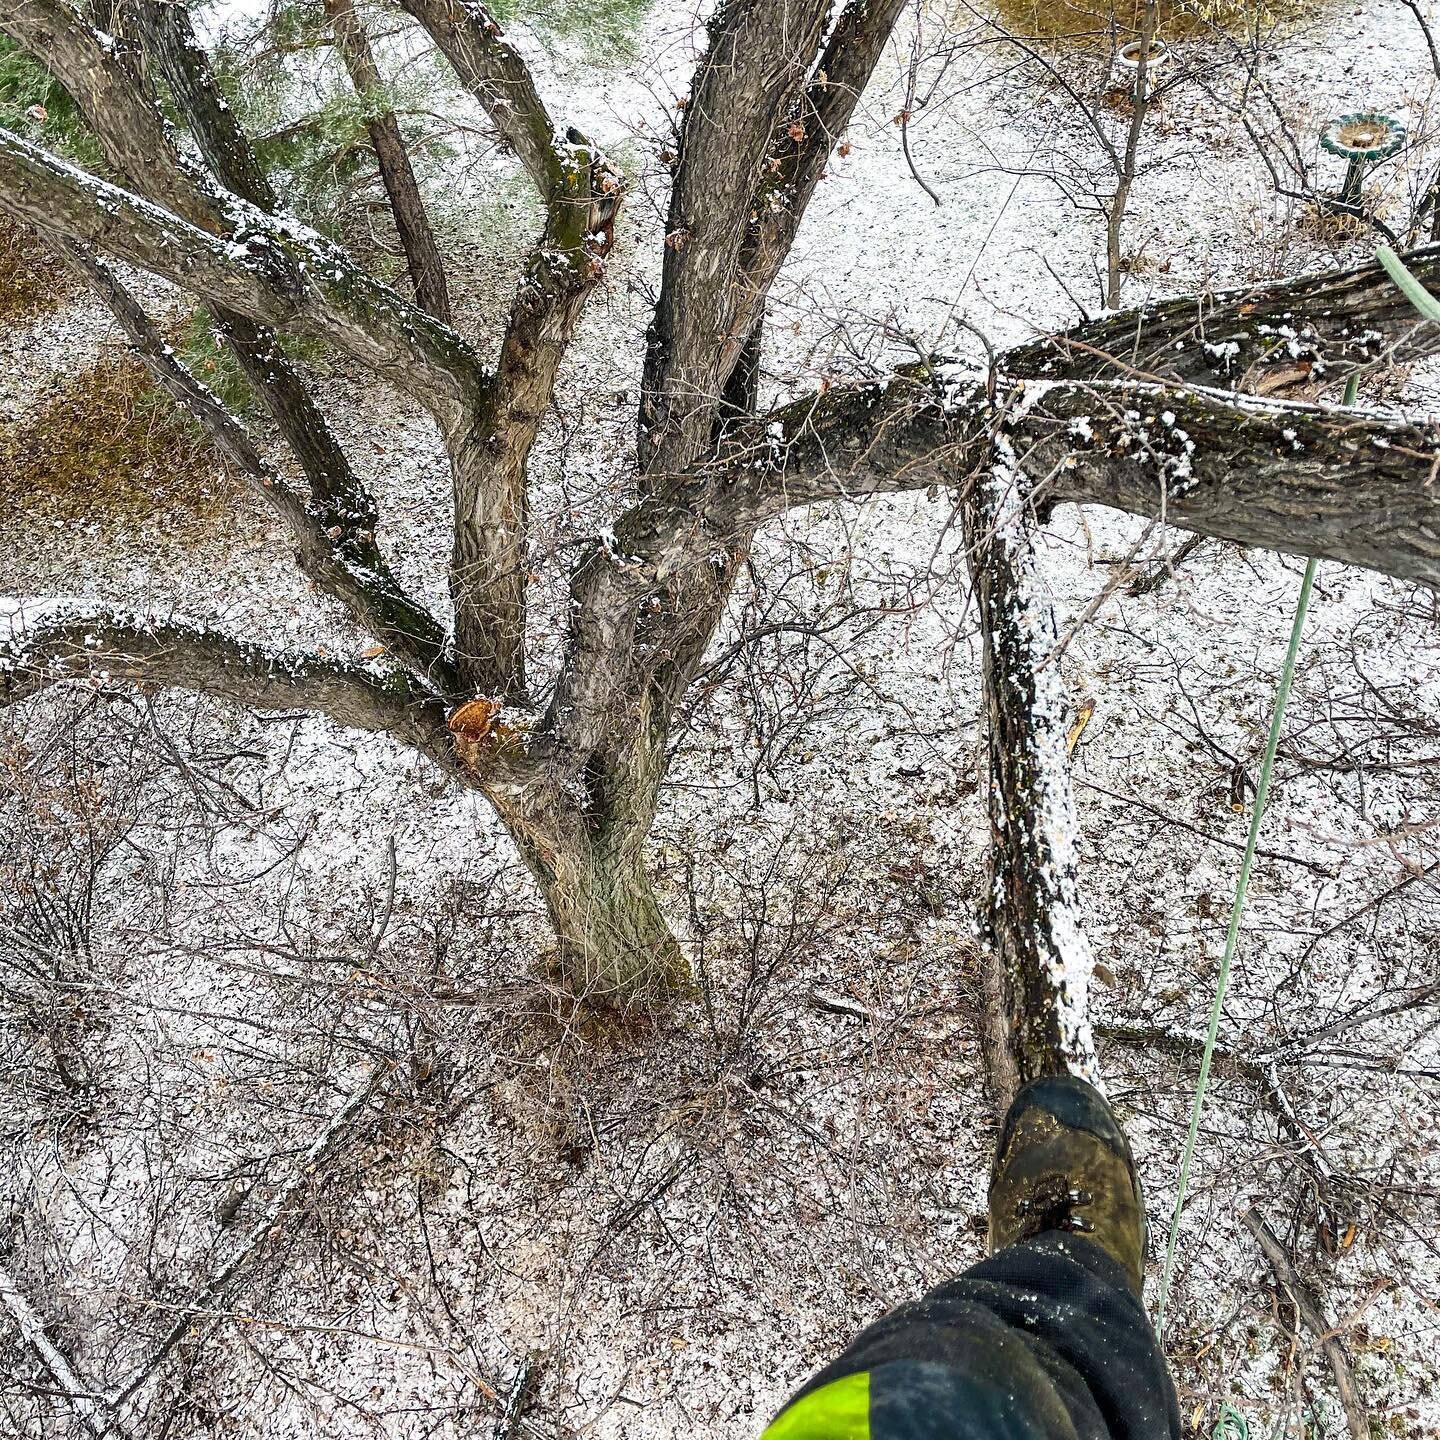 Slippery elms on a snow day make for interesting rope work #industrialathlete #dirtyhandscleanmoney #bluecollar #treeclimber #highclimbersbrotherhood #climbingarborist #climber #ropeaccess #dirtyjobs #skilledtrades #treepro #treelife #madeforthis #pa